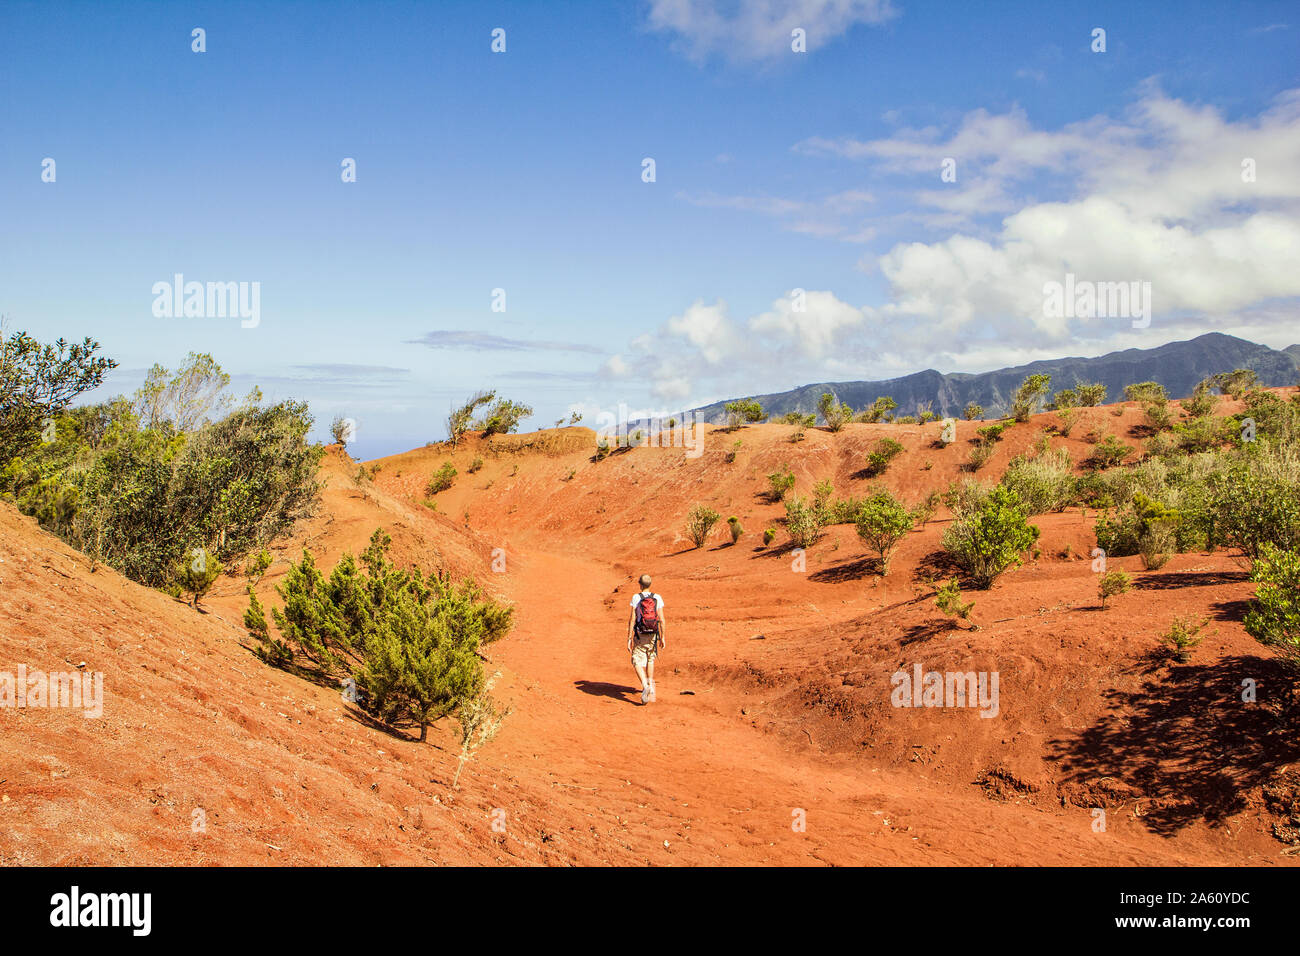 Hiker on red soil, Agulo, La Gomera, Canary Islands, Spain Stock Photo